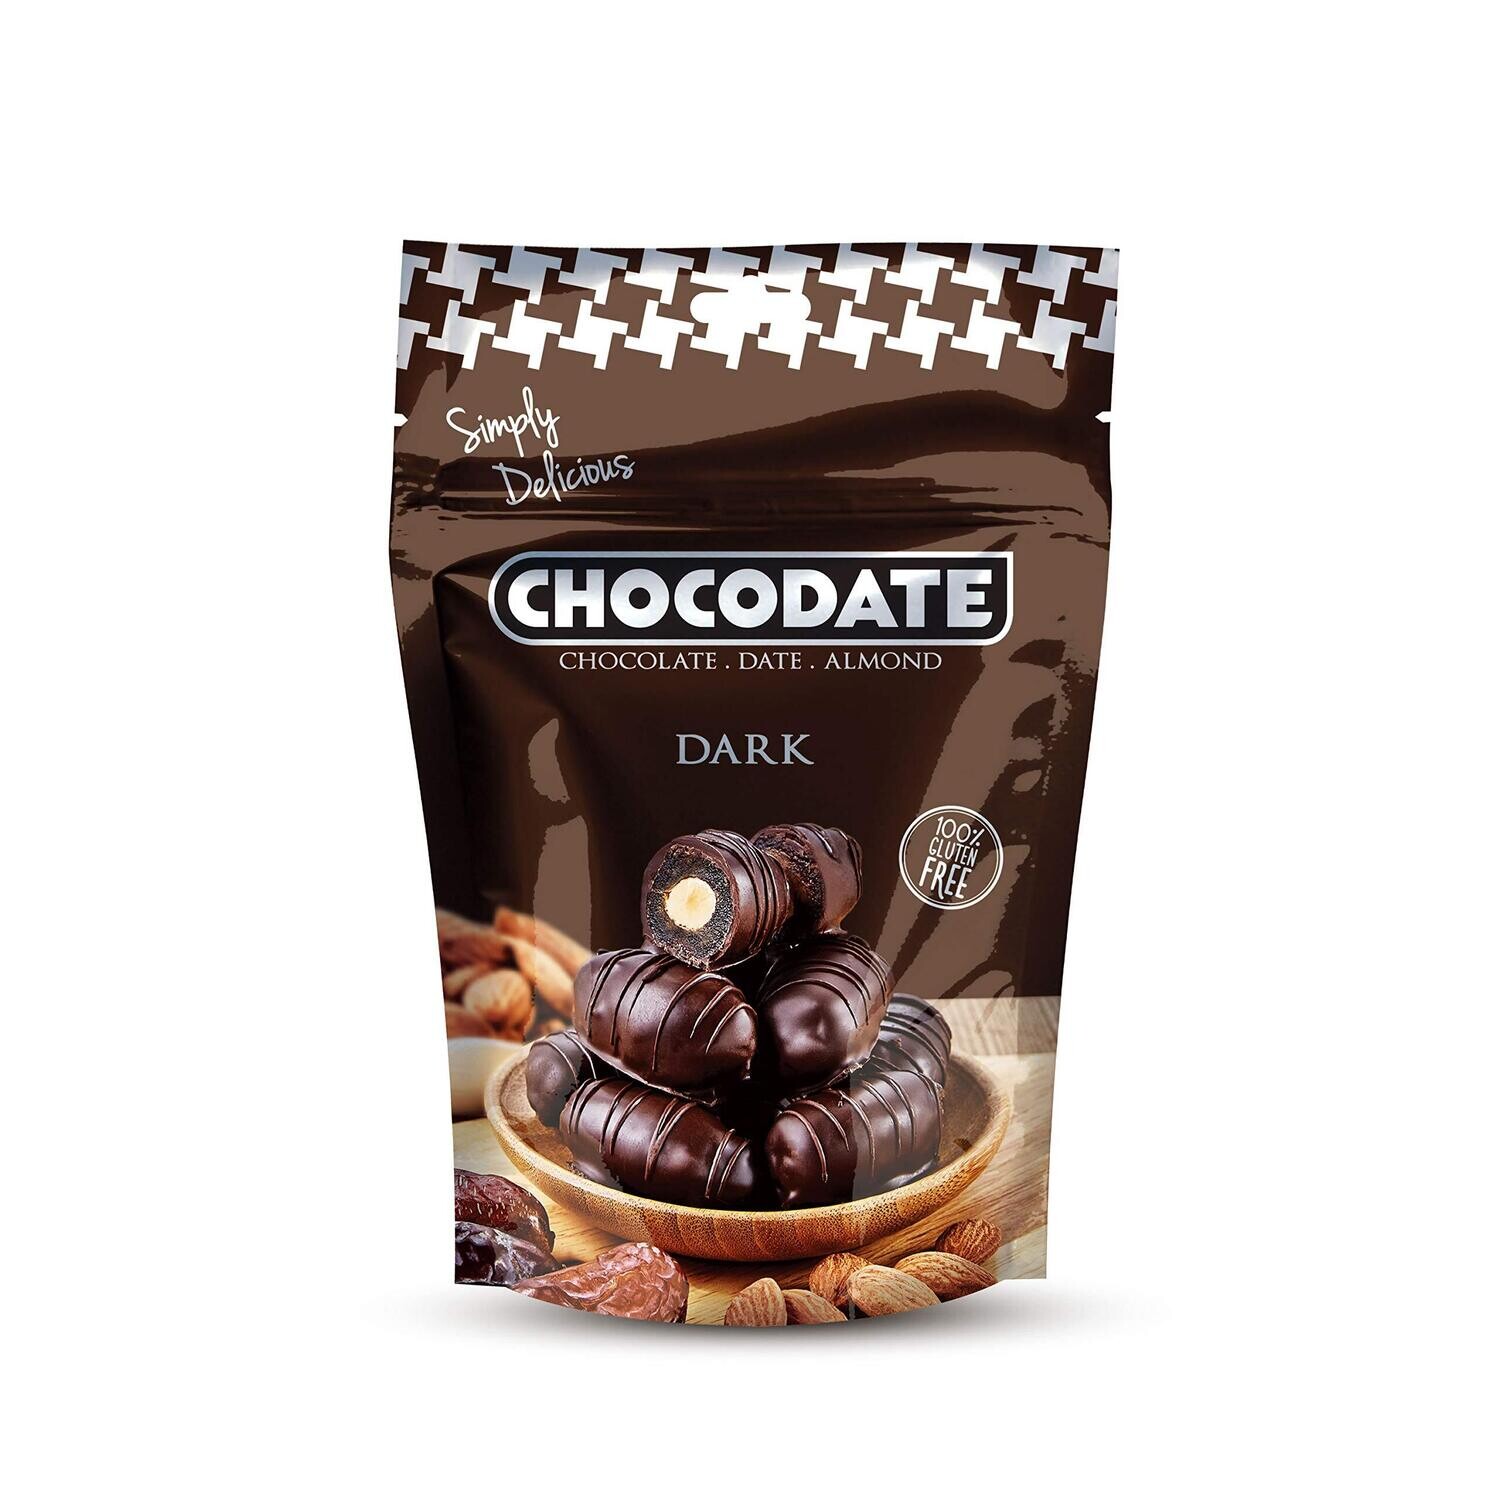 Chocodate Almond Extra Dark 85% - 100g Contents 8pcs - Bulk Pack